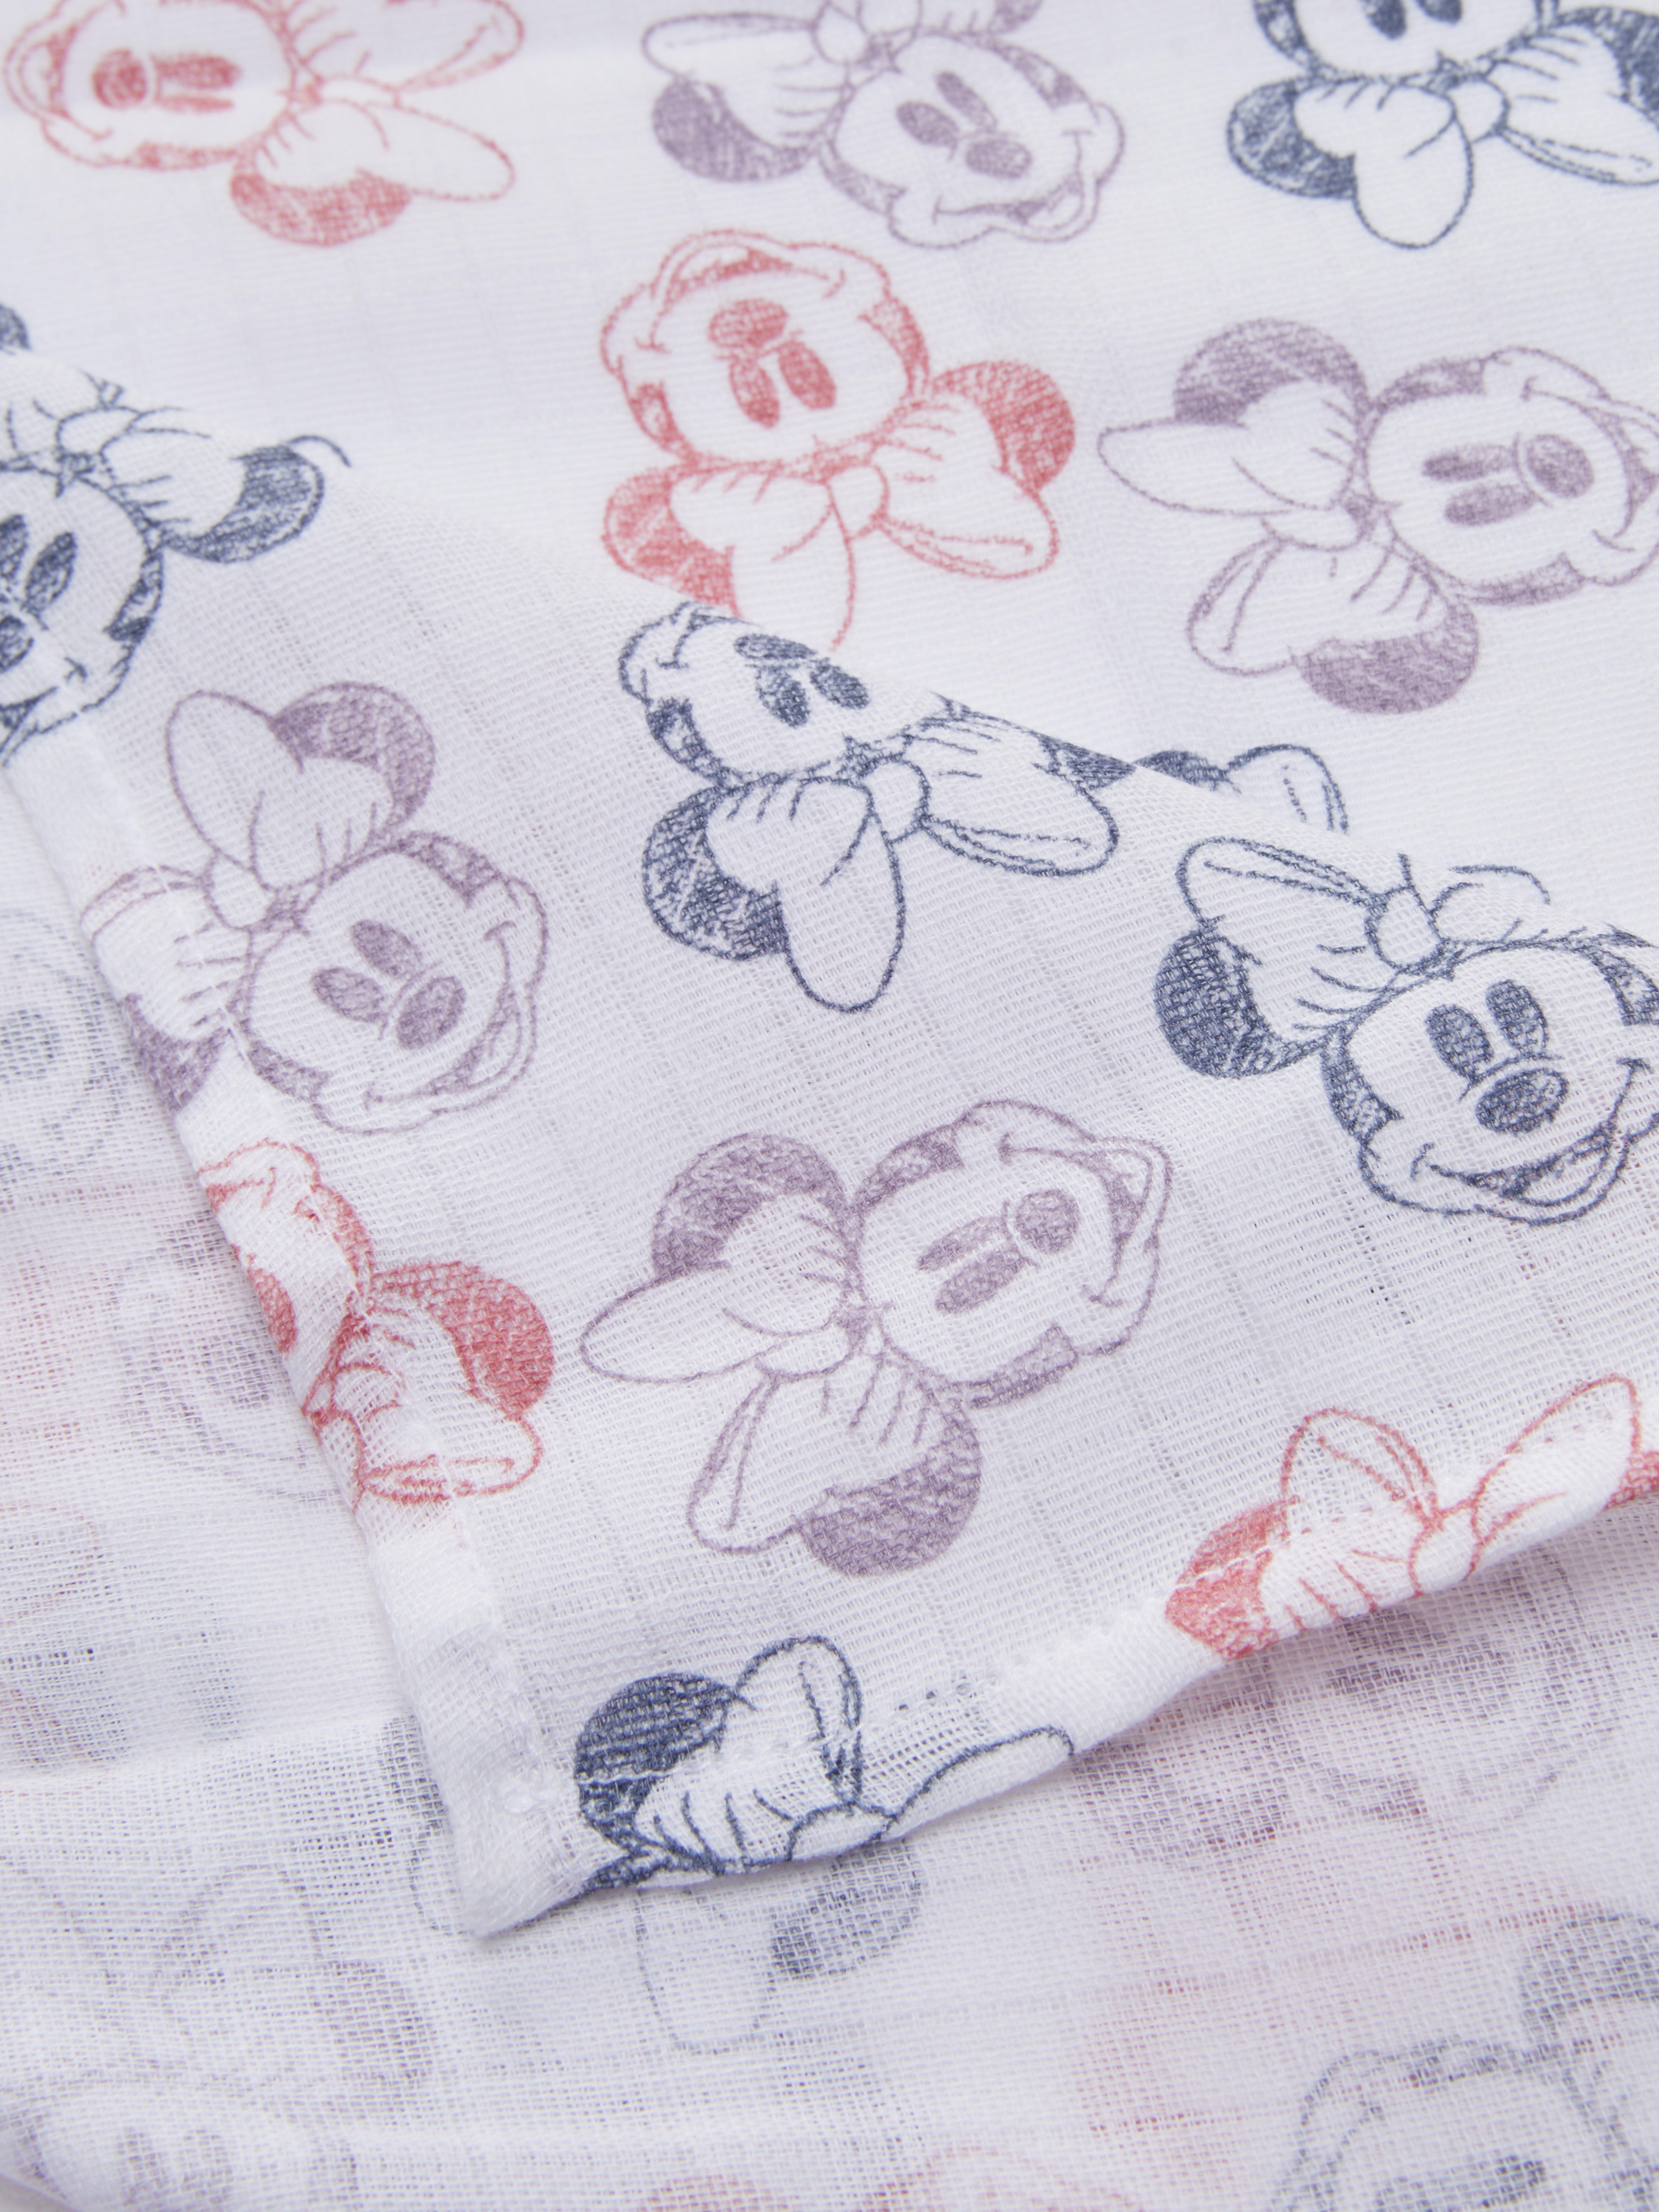 3pk Disney's Minnie Mouse Muslin Cloths